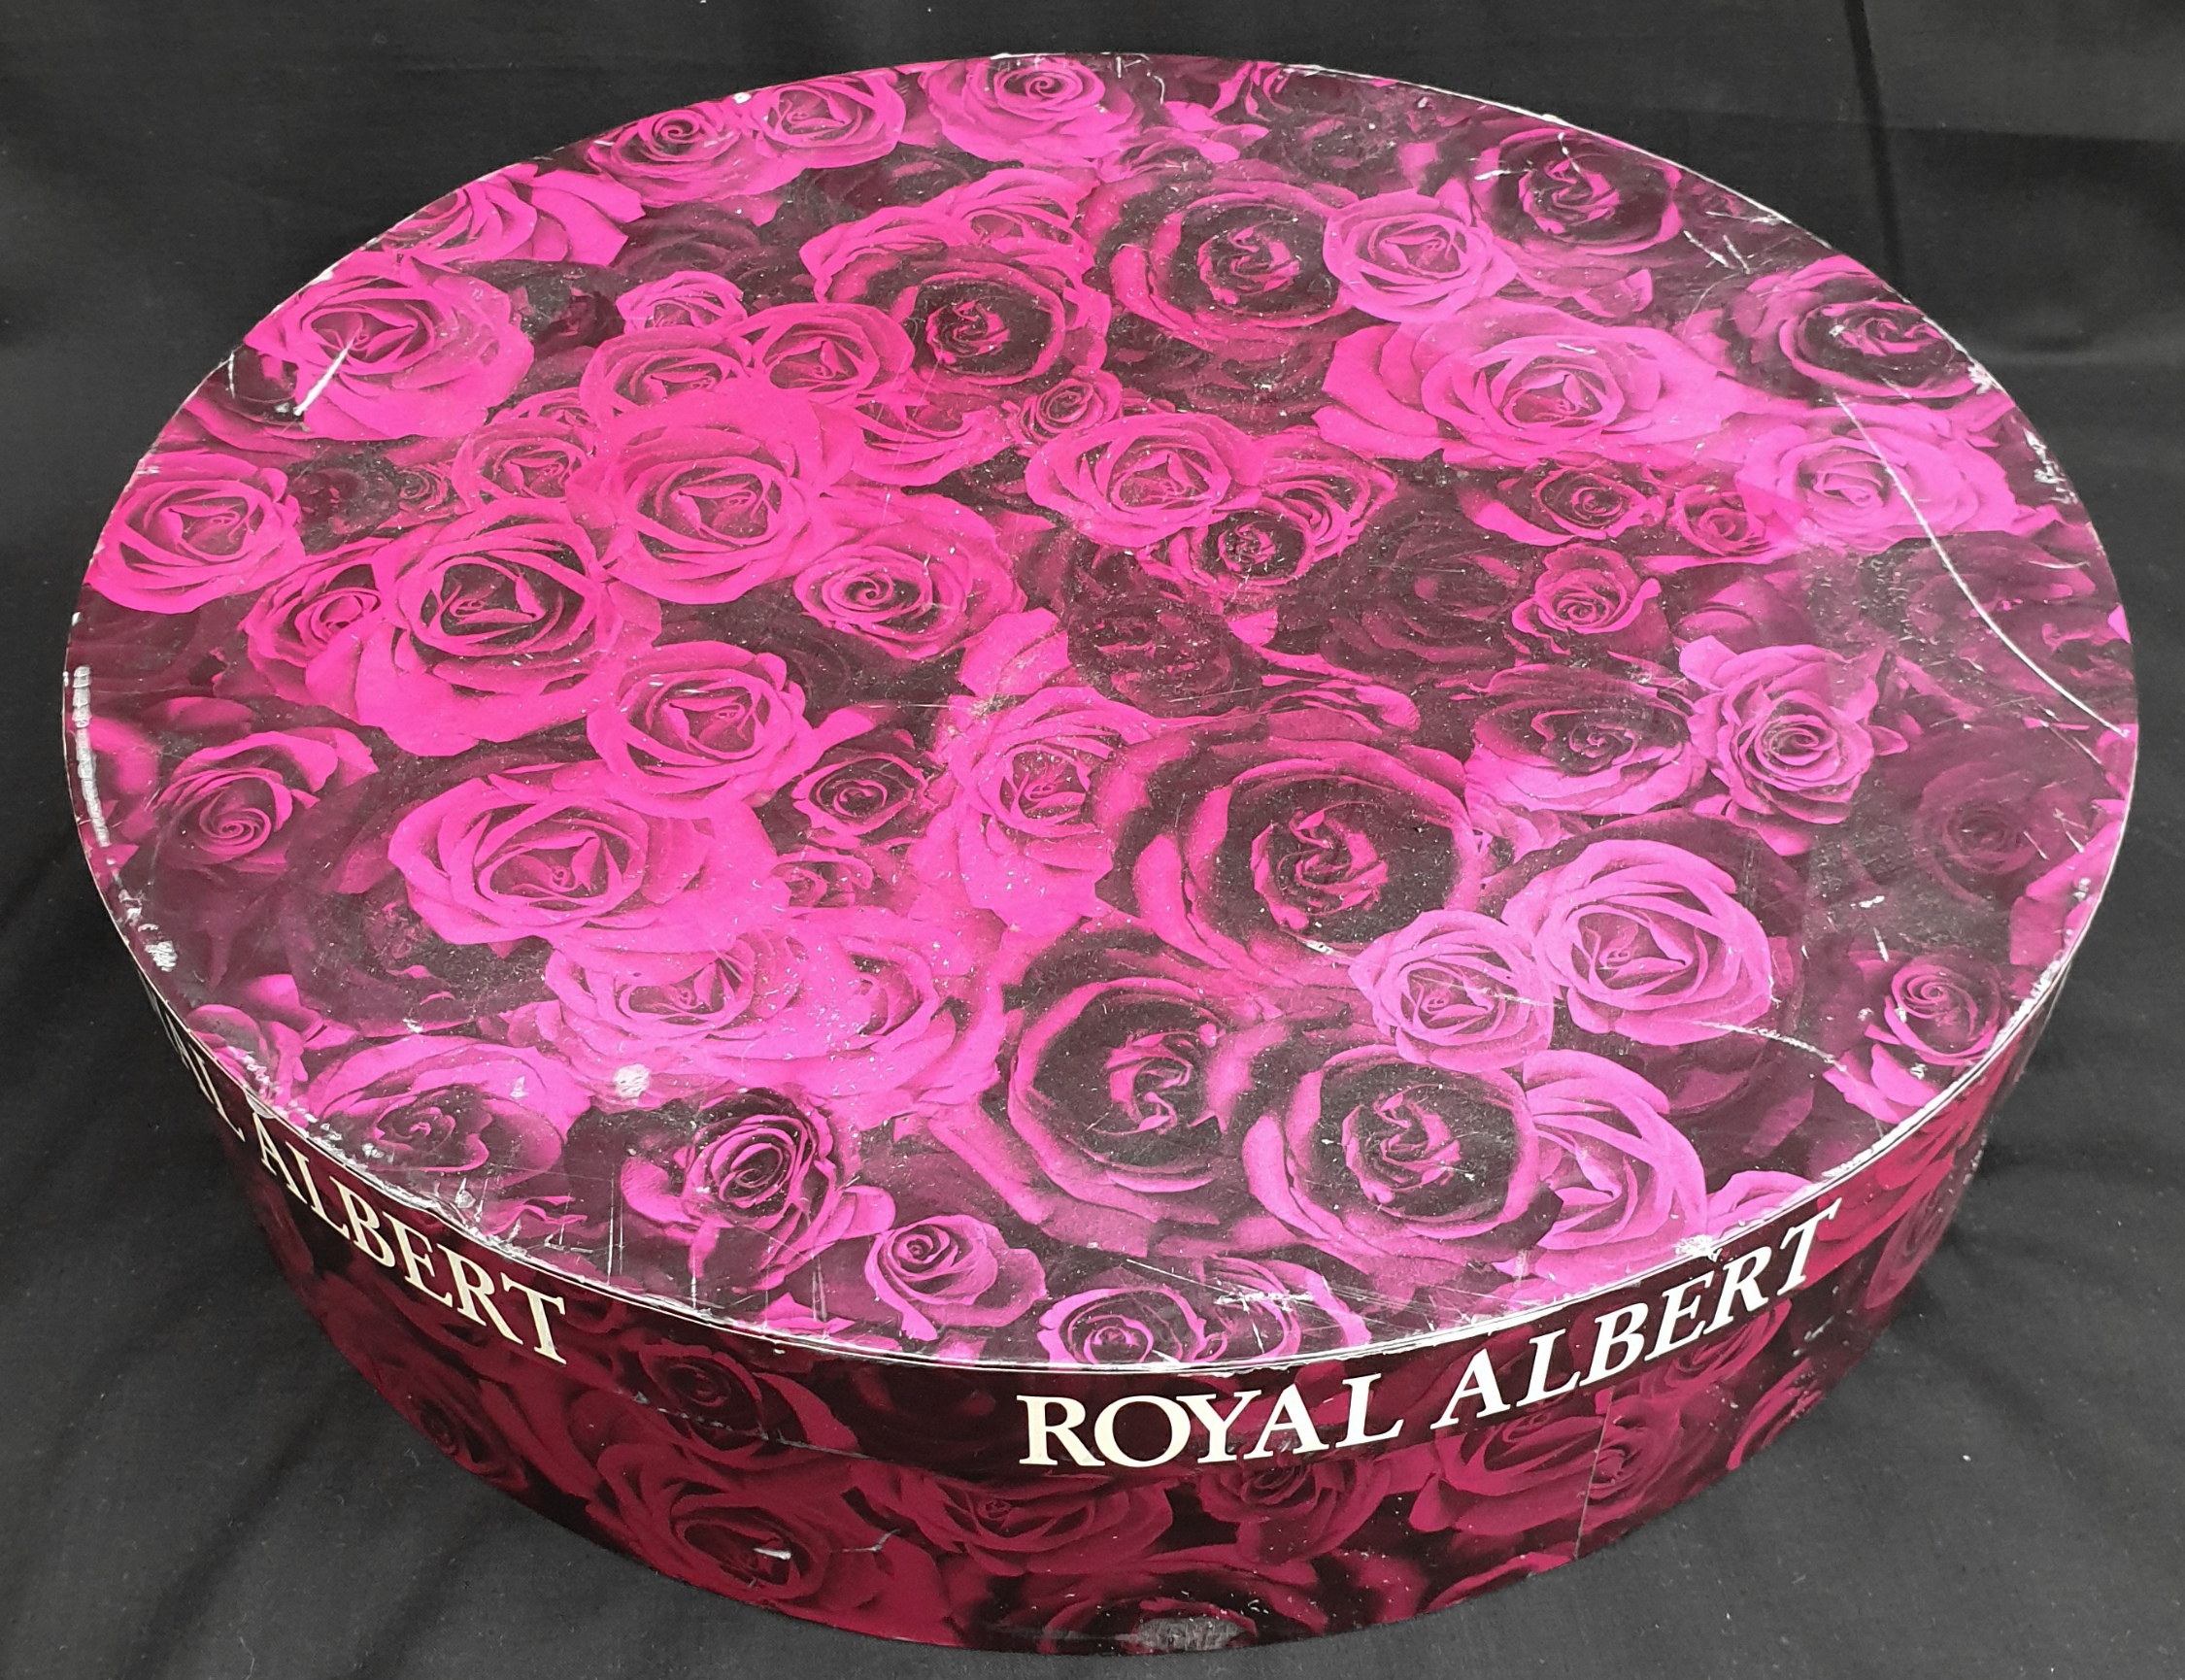 Vintage Royal Albert Old Country Rose Chip & Dip Platter Boxed - Image 2 of 2